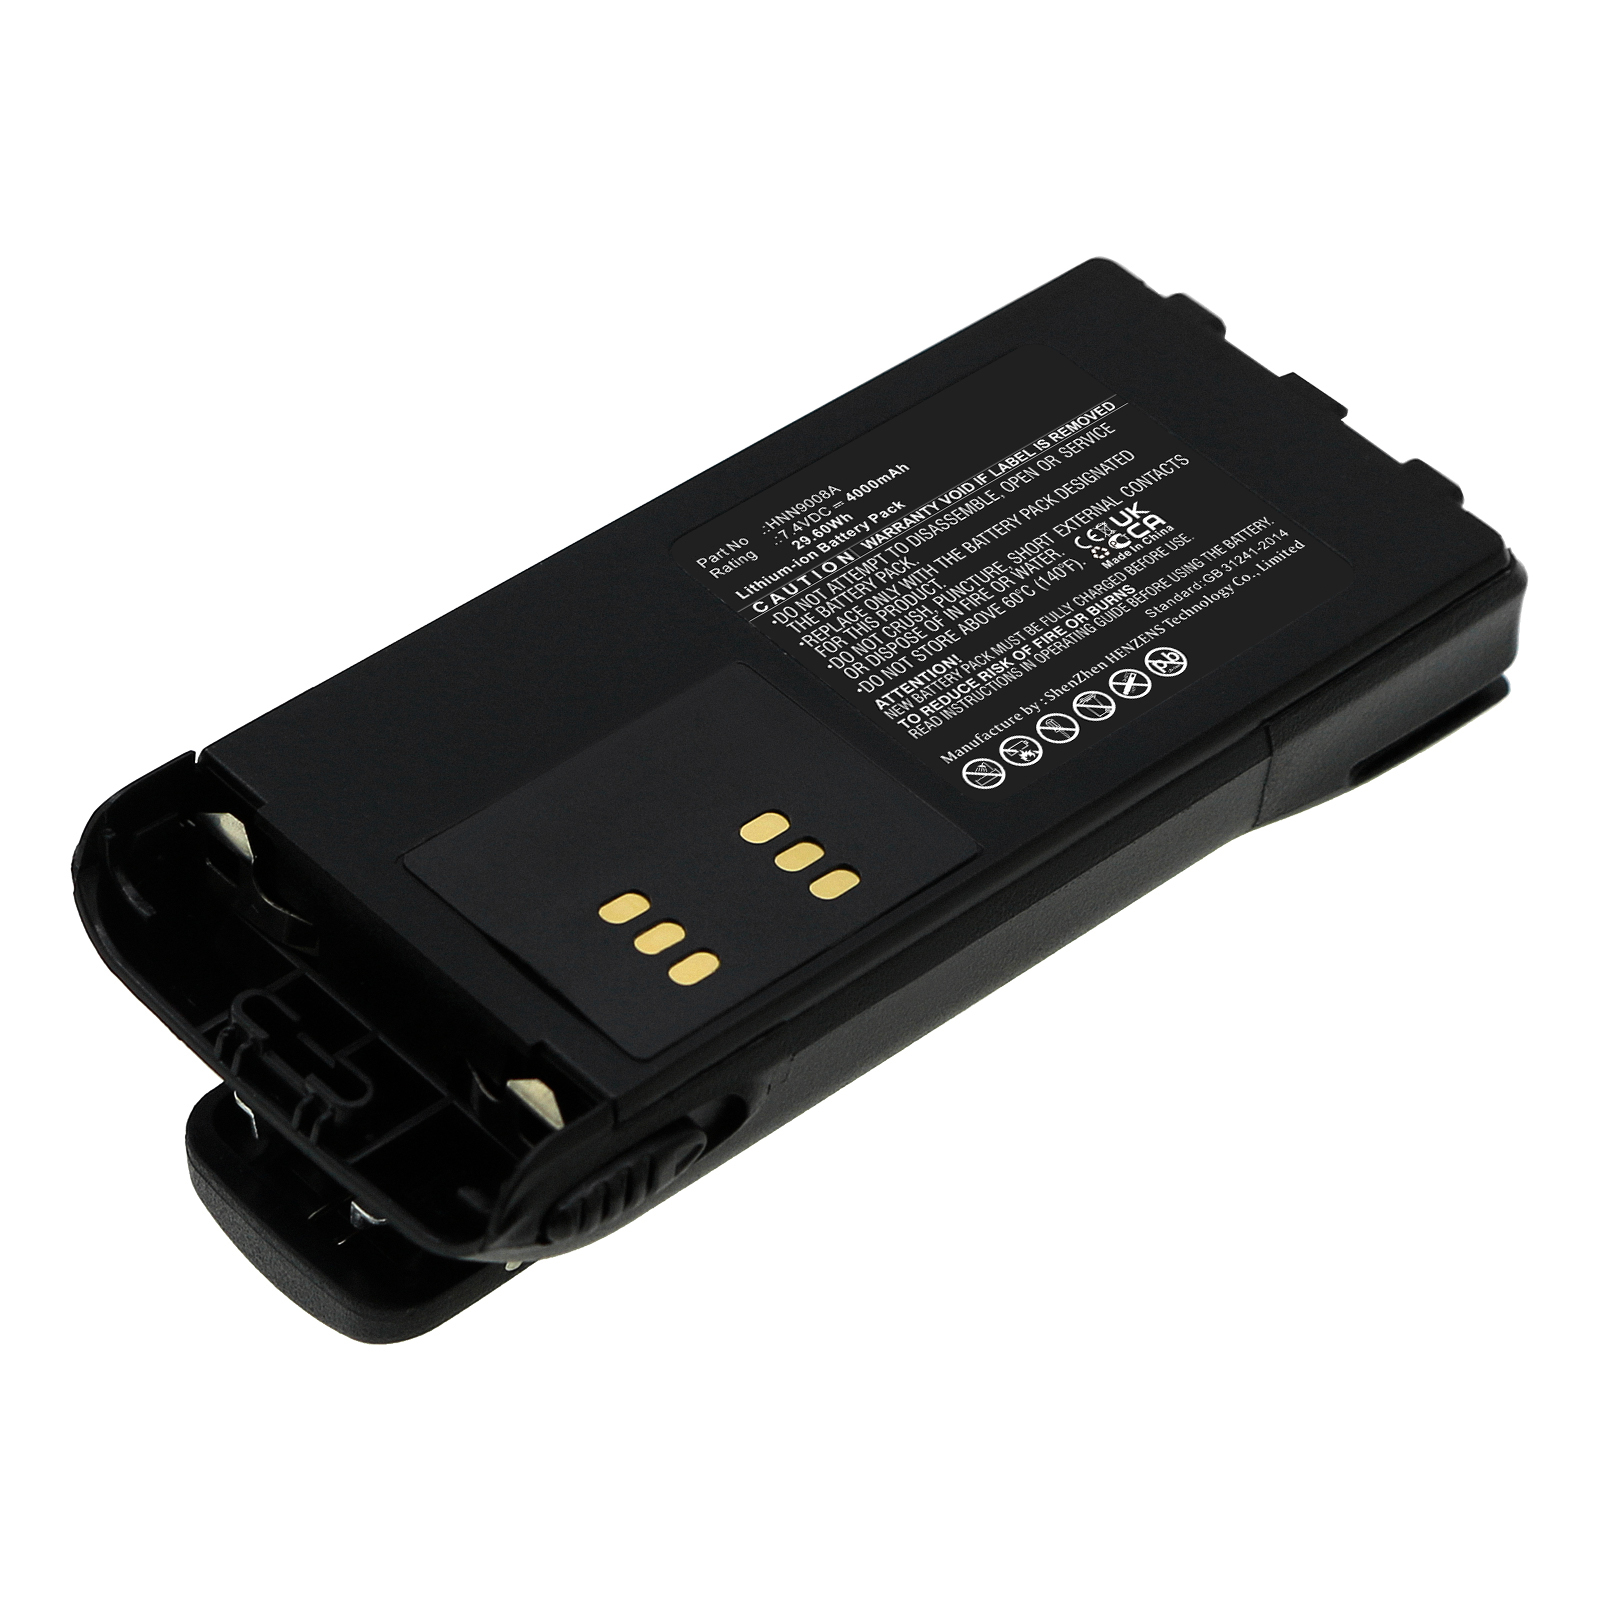 Synergy Digital Communication Battery, Compatible with Motorola HMNN4151 Communication Battery (Li-ion, 7.4V, 4000mAh)